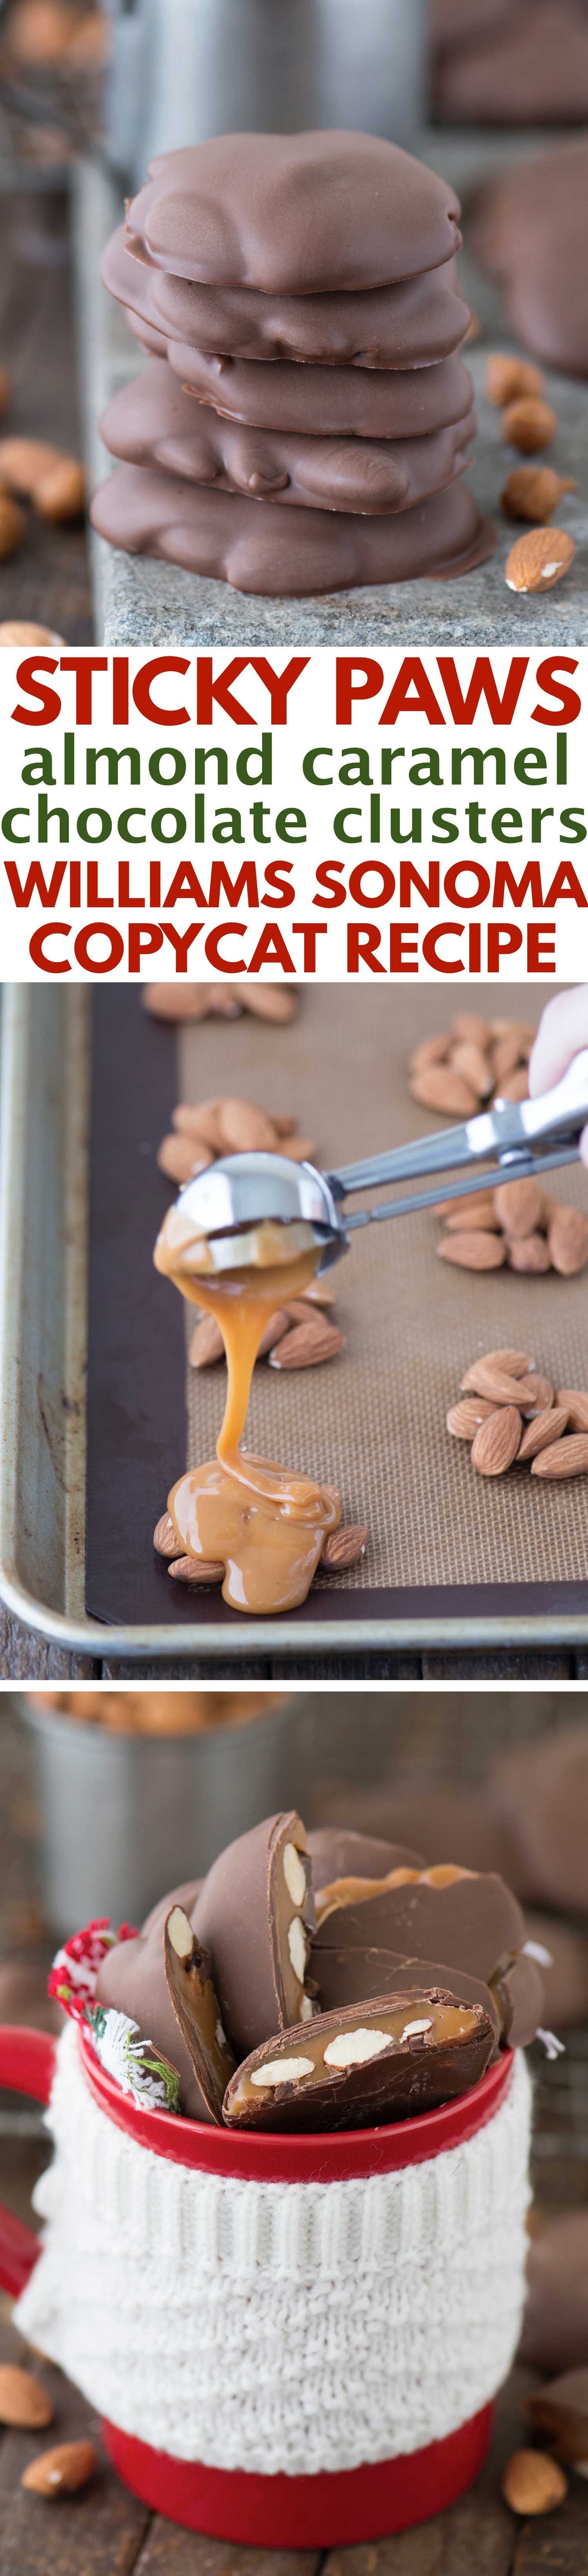 Sticky Paws – Williams Sonoma Copycat christmas candy recipe! Almond caramel clust